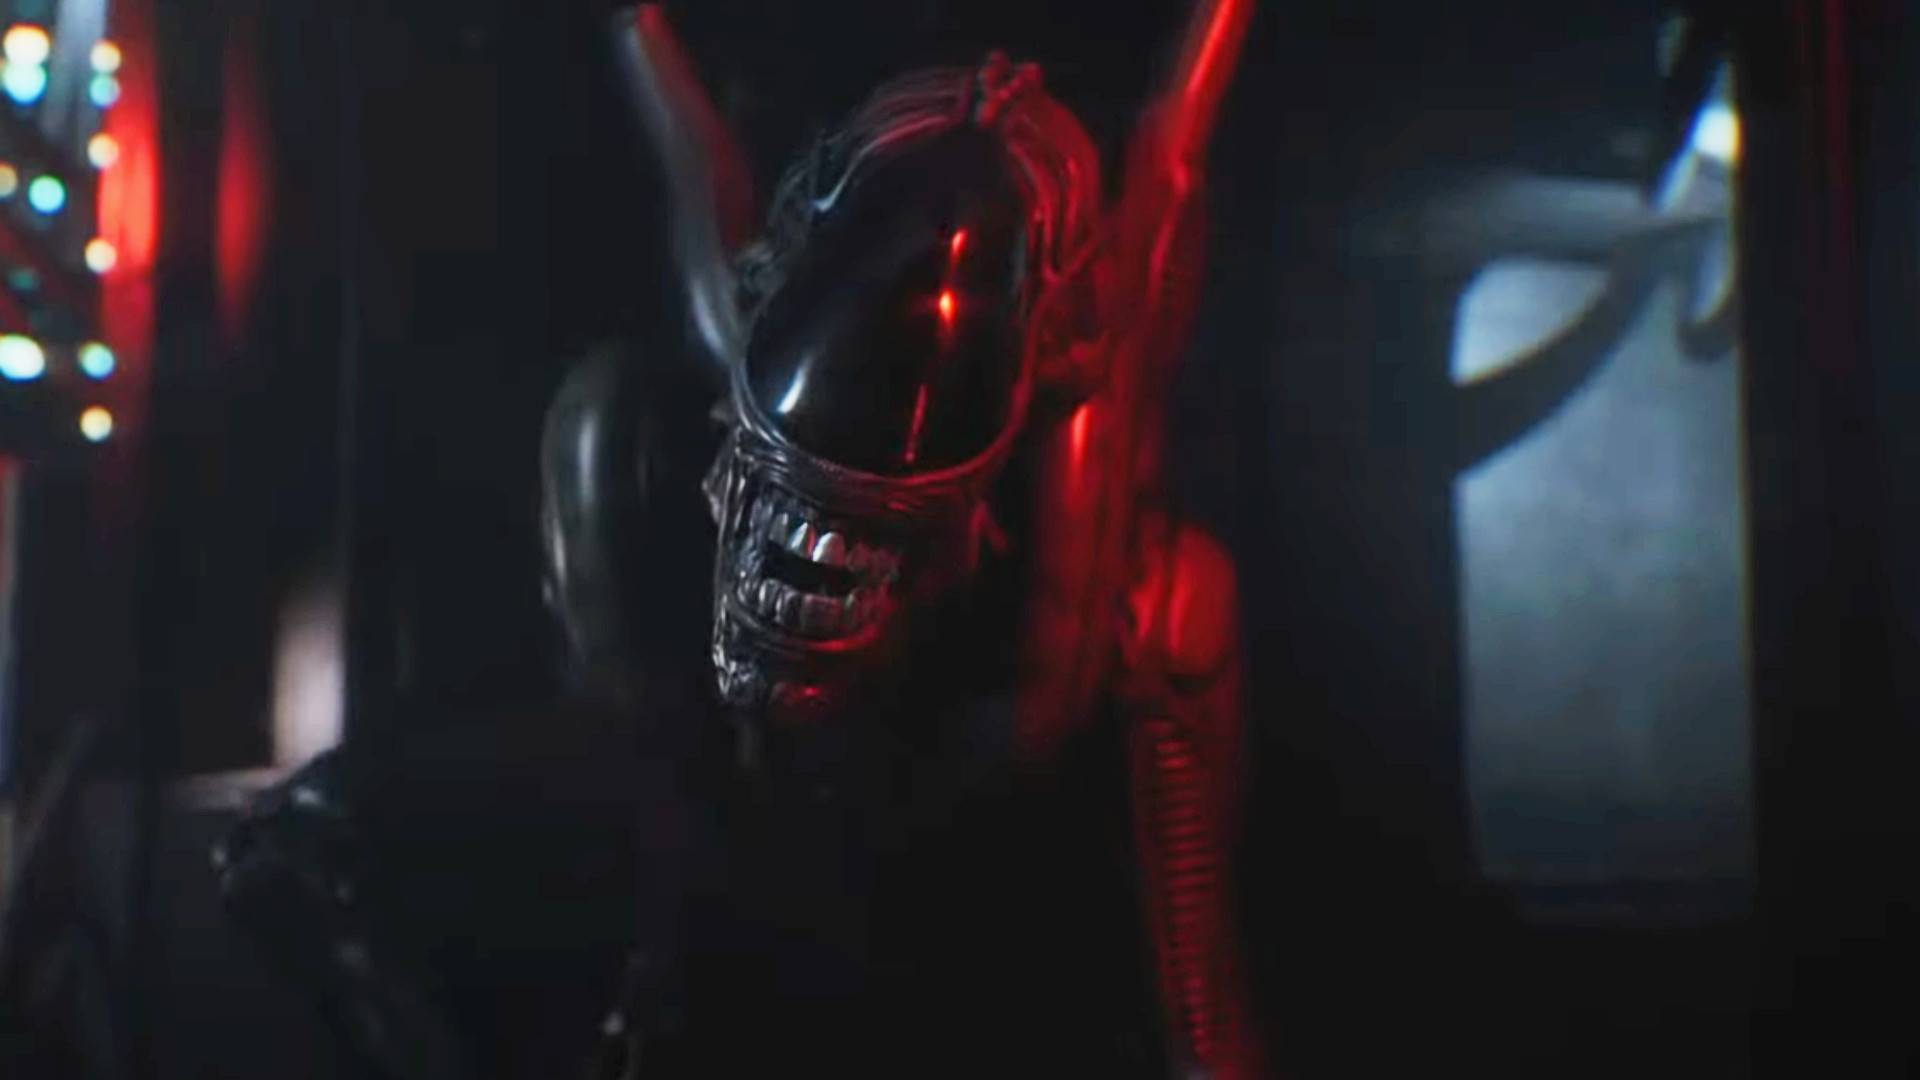 Aliens: Dark Descent pits you against Xenomorph hordes